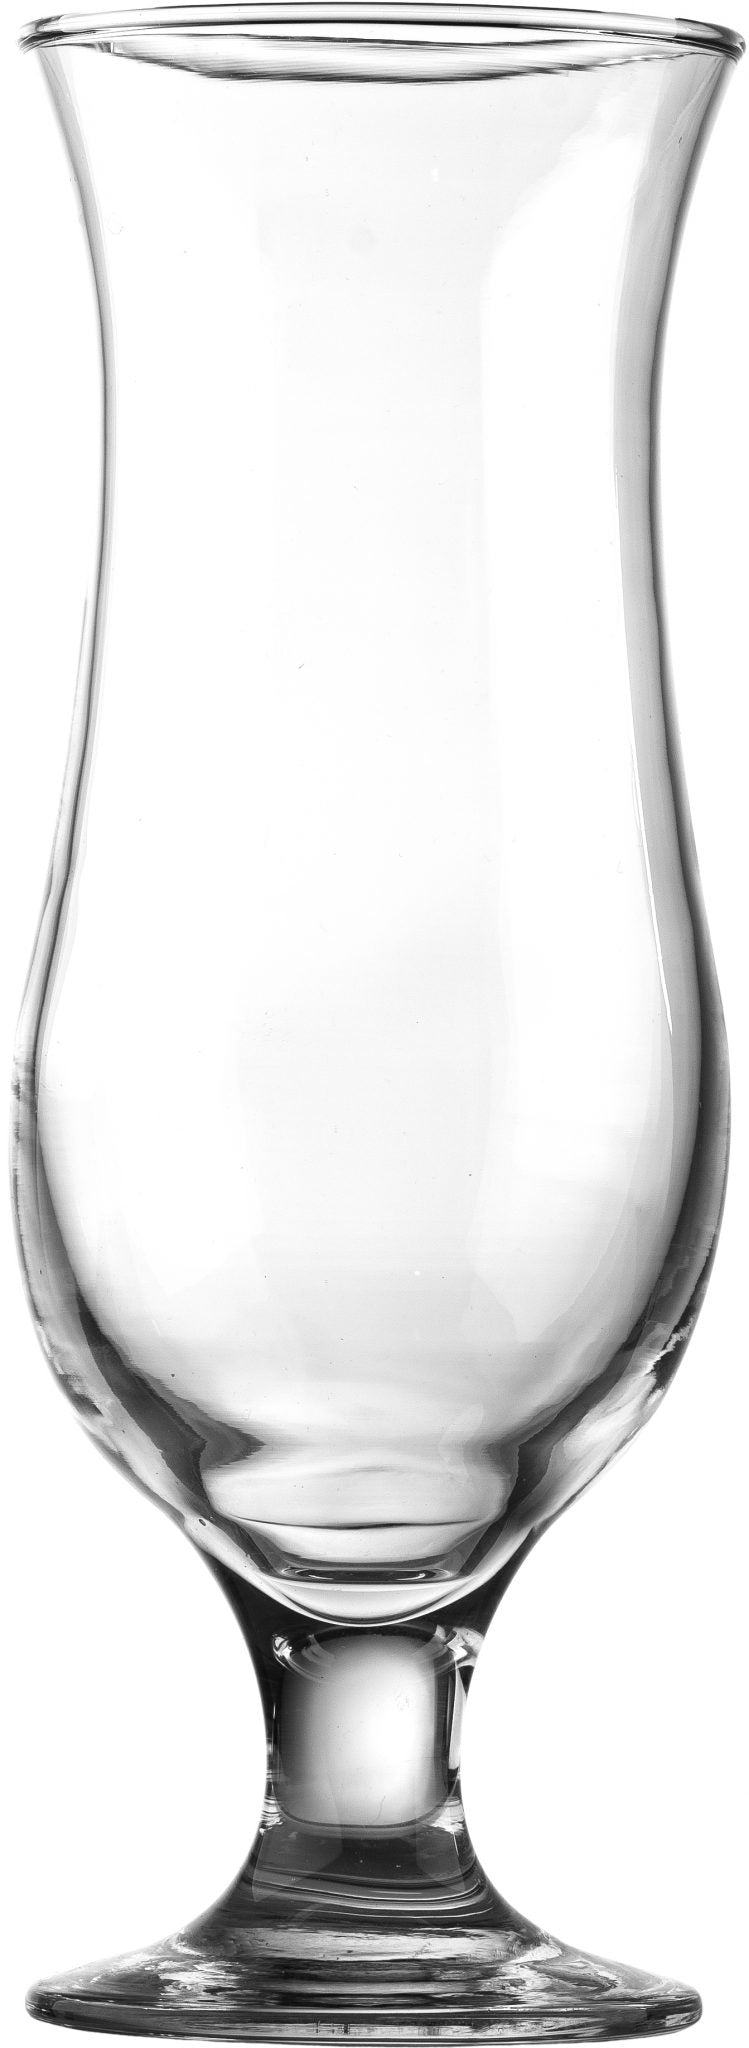 Metropolitan Ariadne Hurricane Cocktail Glasses 15Â½ oz Pack of 6